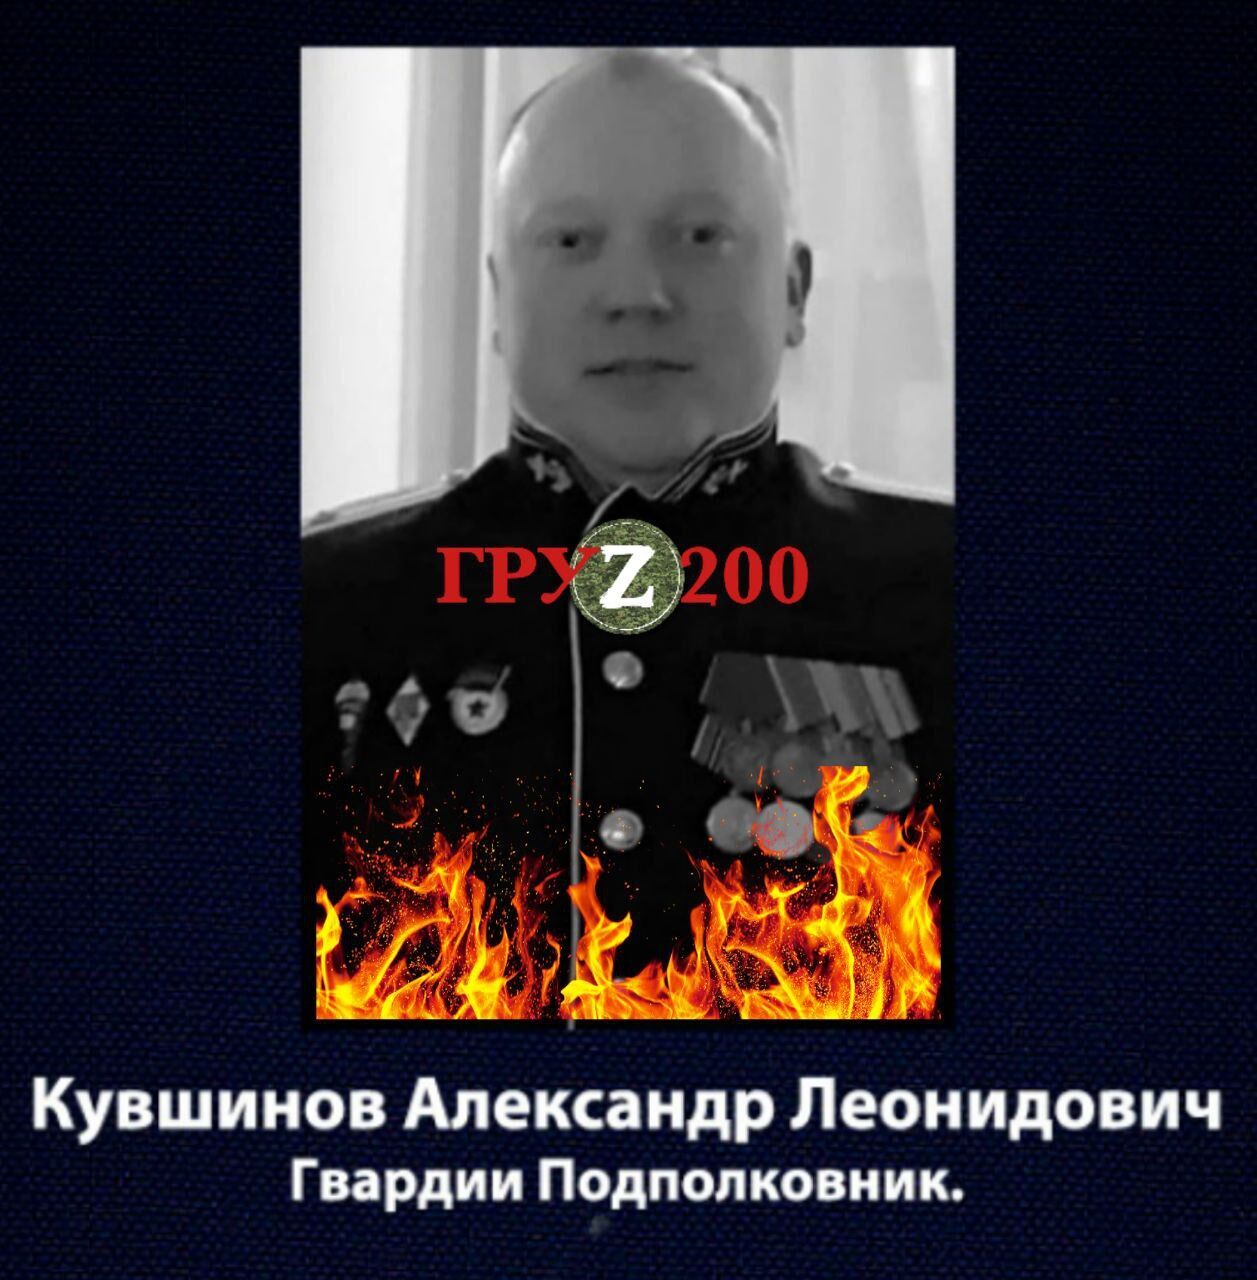 Александр Кувшинов воевал против Украины